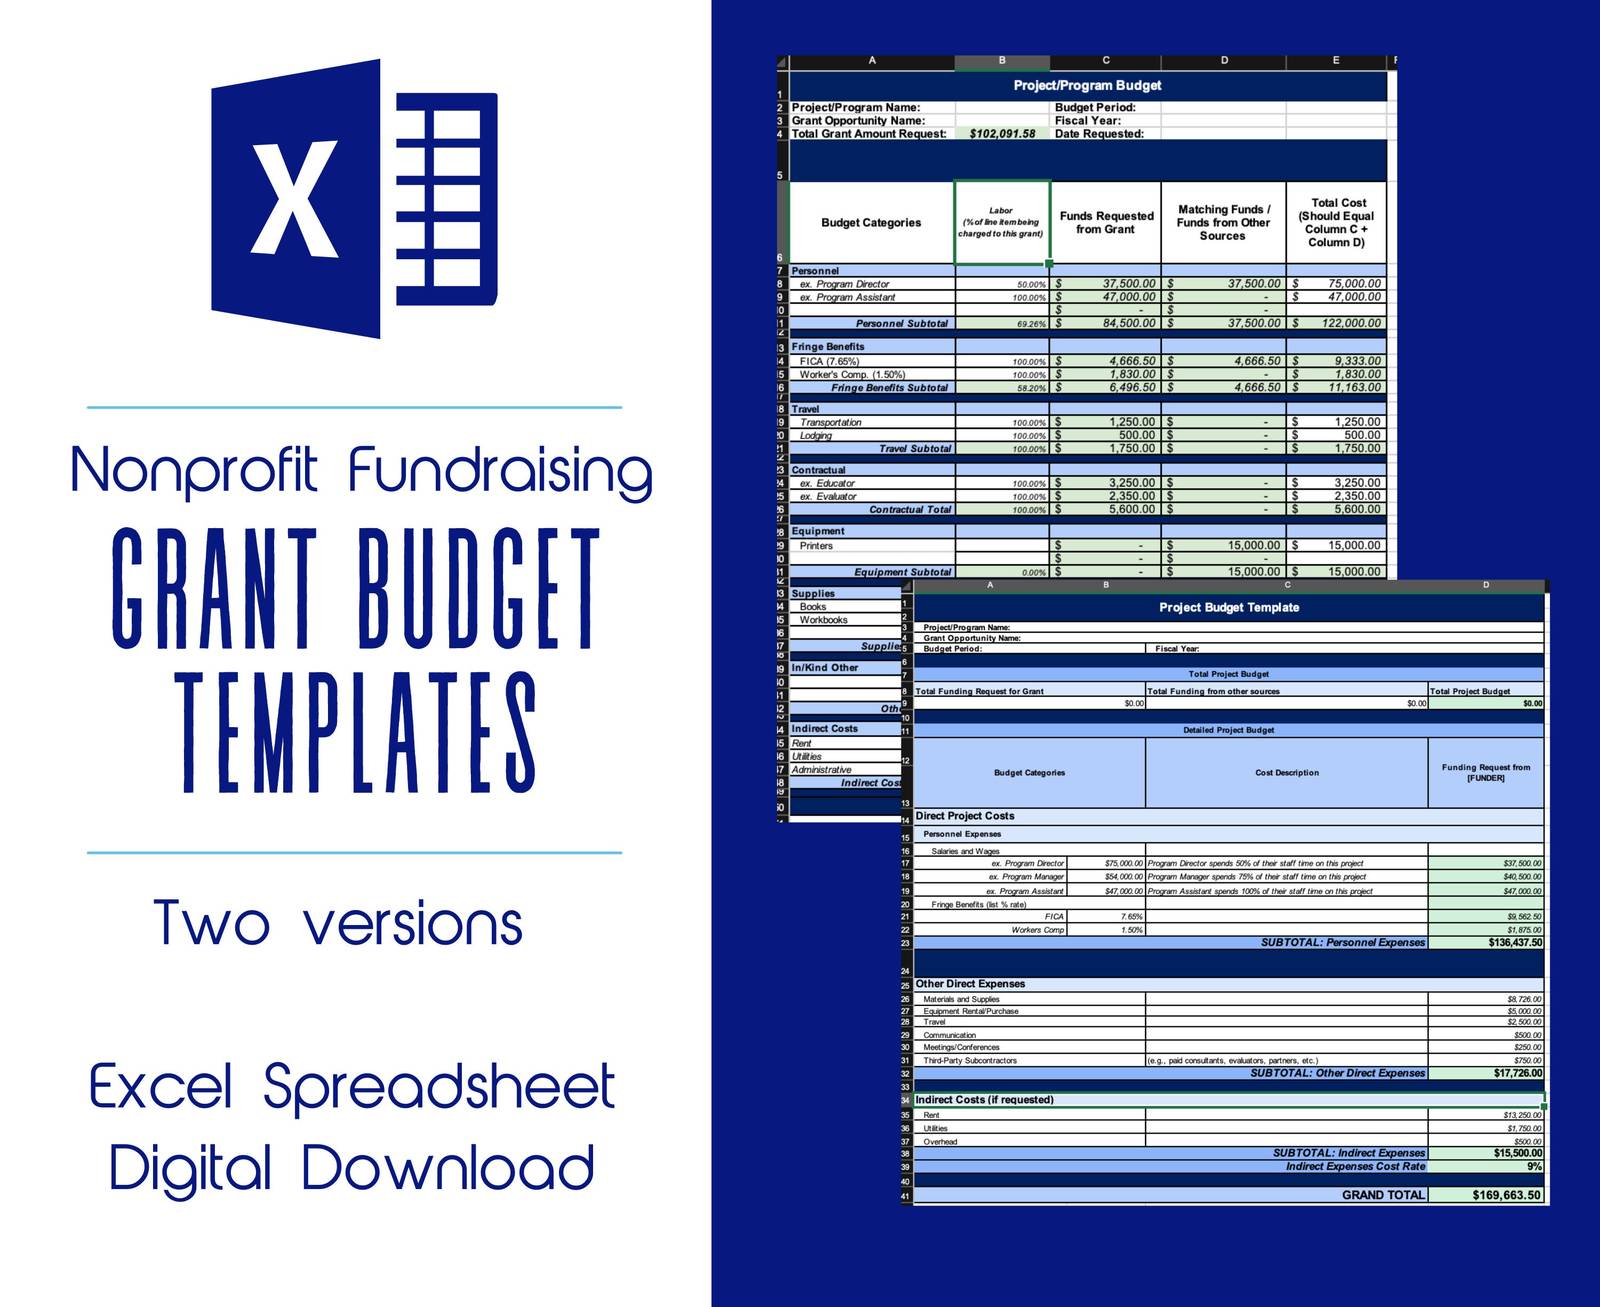 Nonprofit Budget Template for Grant Proposals | Grant Budget Templates